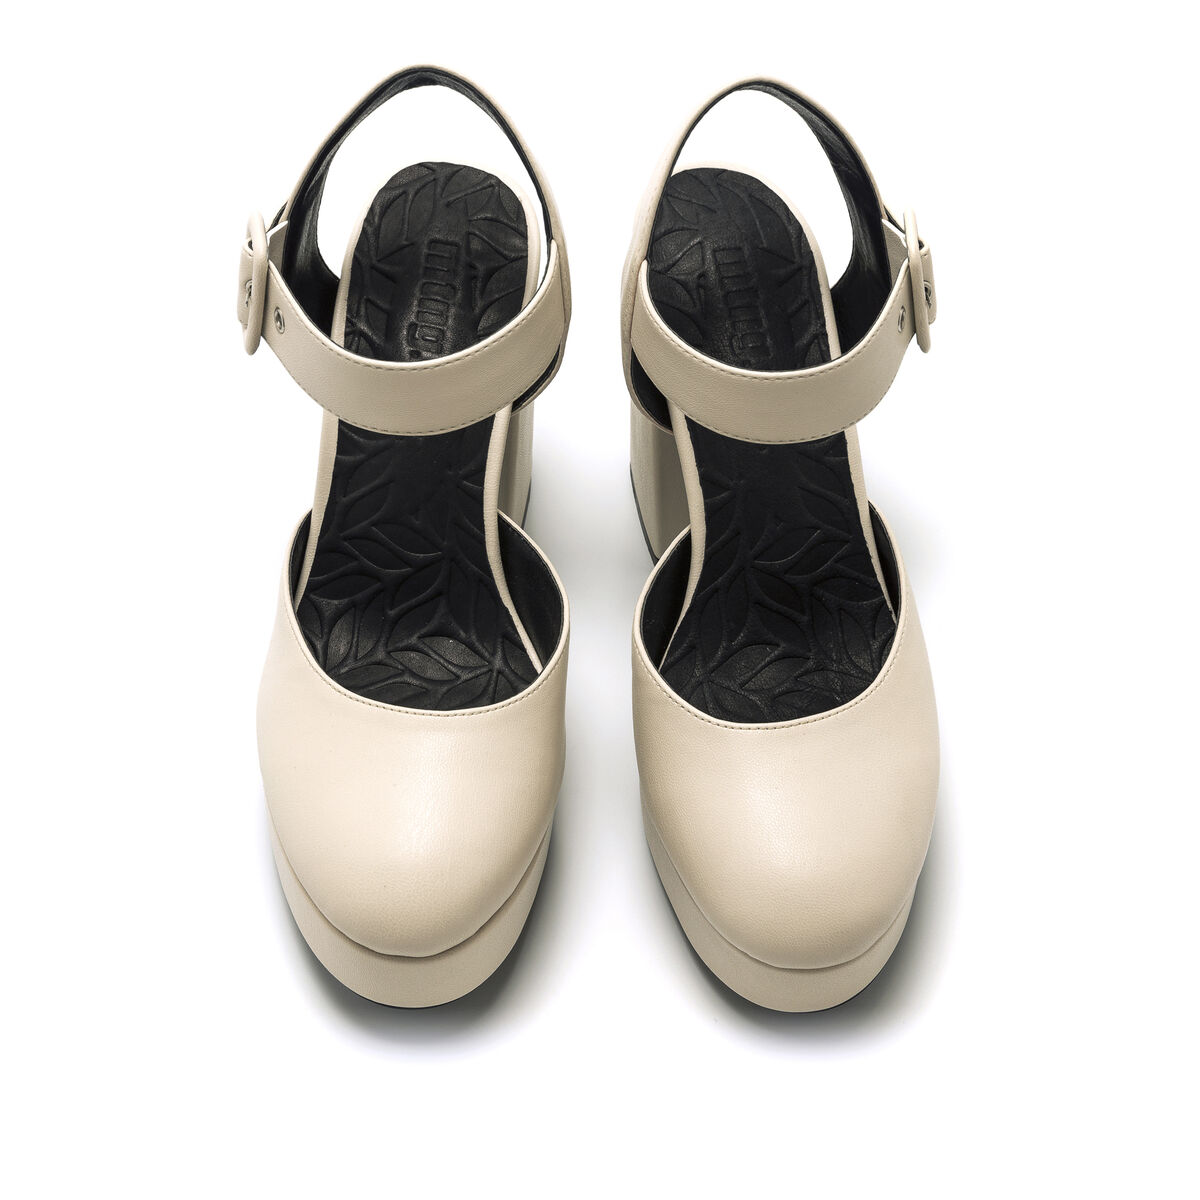 Zapatos de tacon de Mujer modelo NAOMI de MTNG image number 5